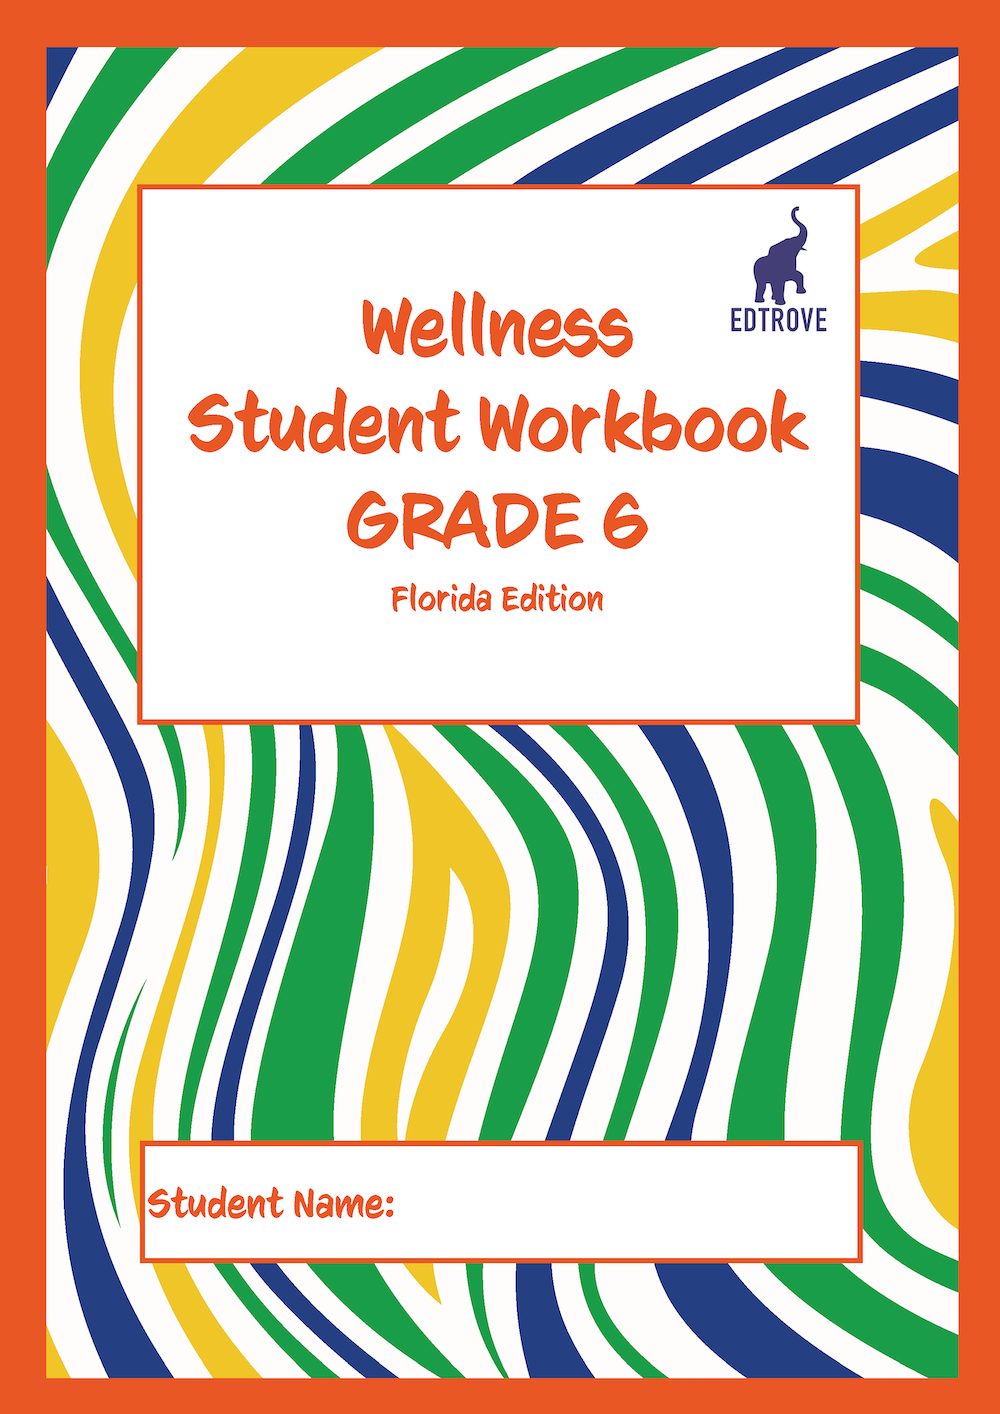 Wellness Student Workbook Grade 6 (Florida edition)